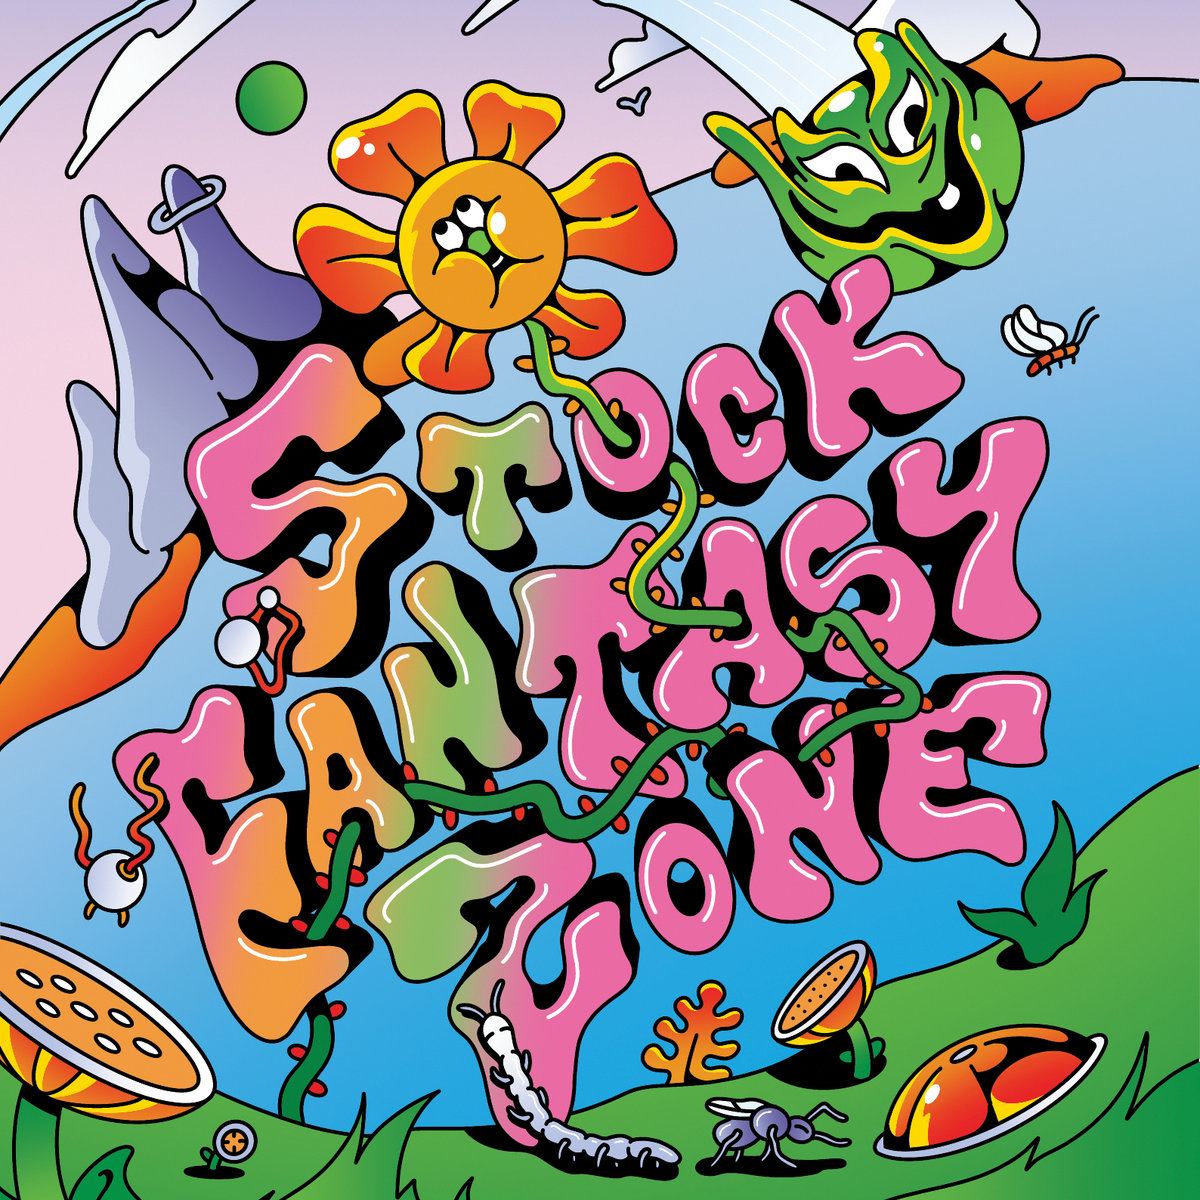 Babau - Stock Fantasy Zone : Cassette